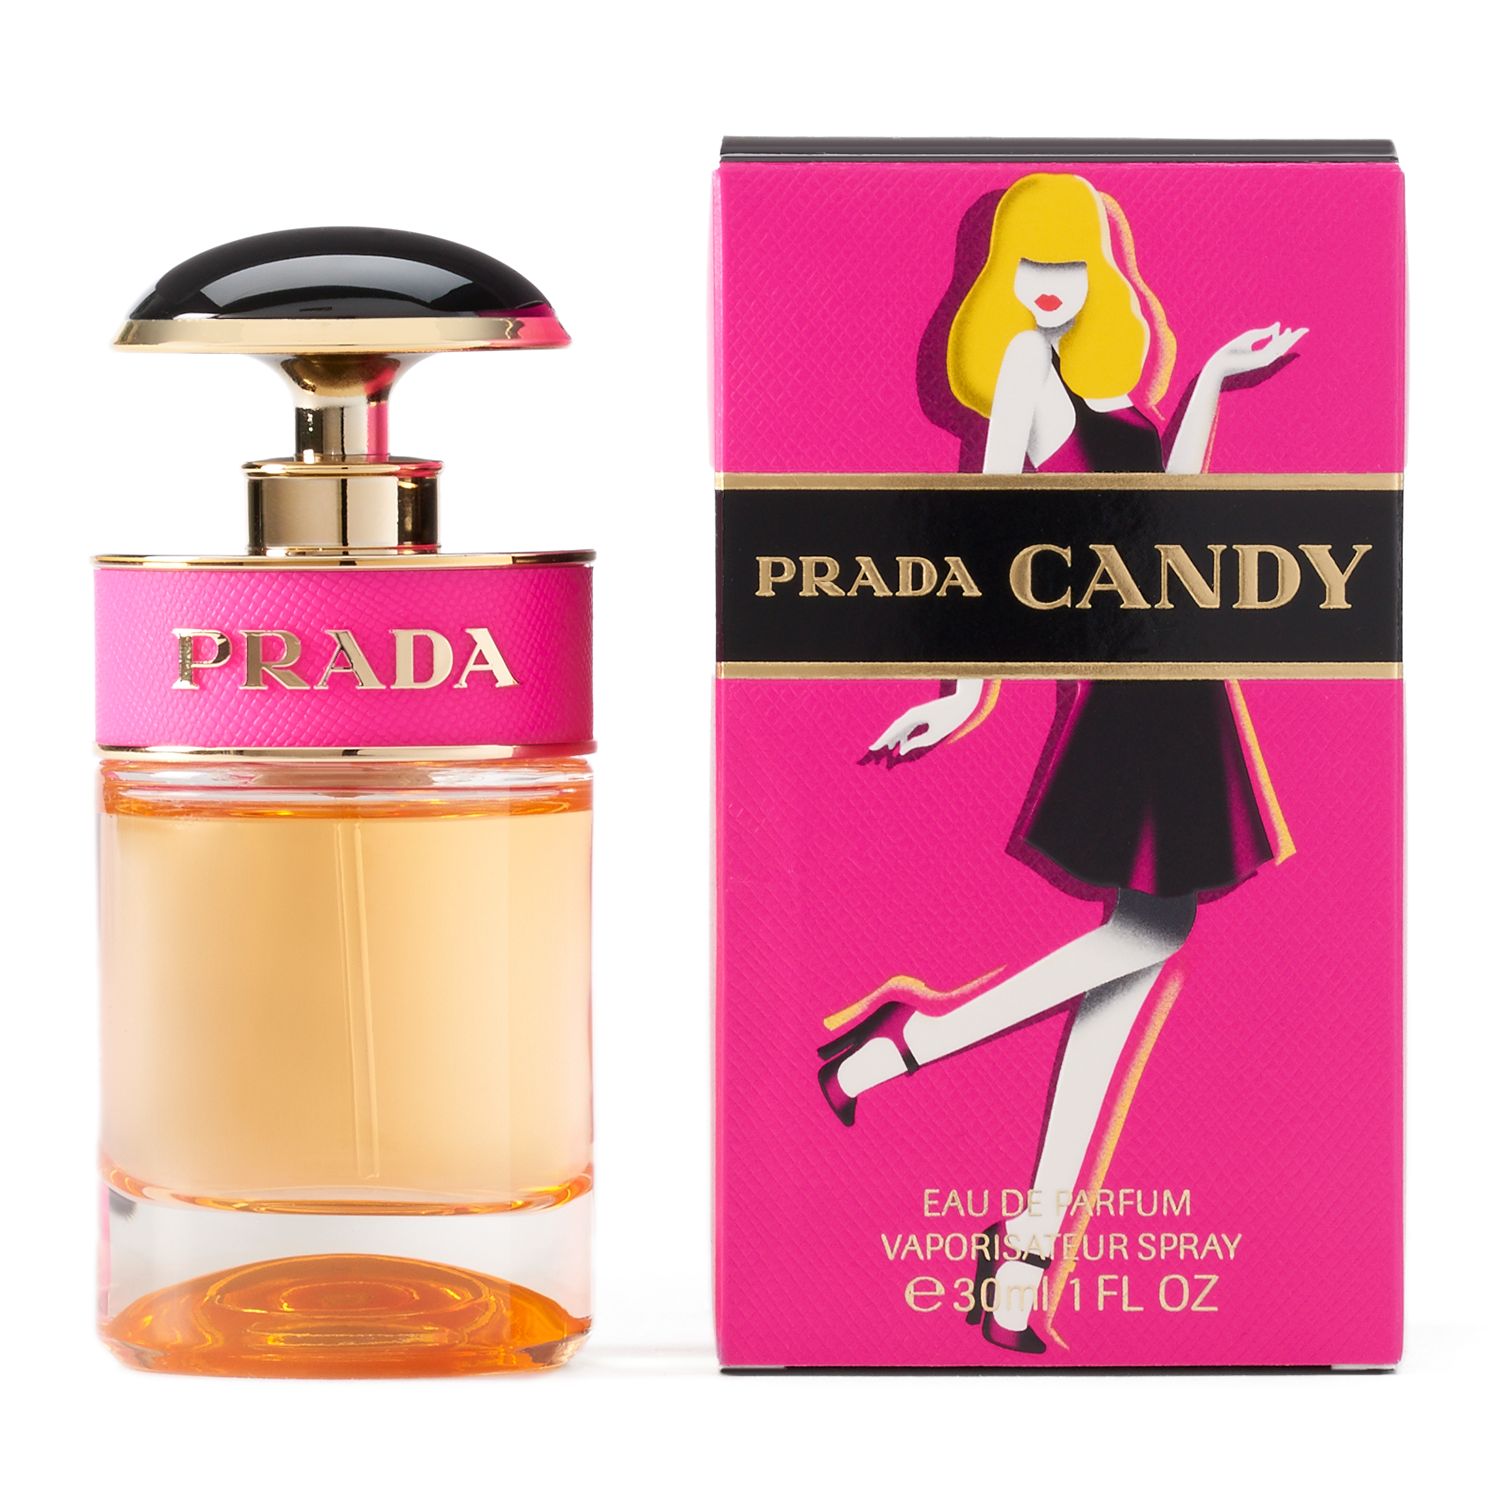 Prada Candy Women's Perfume - Eau de Parfum